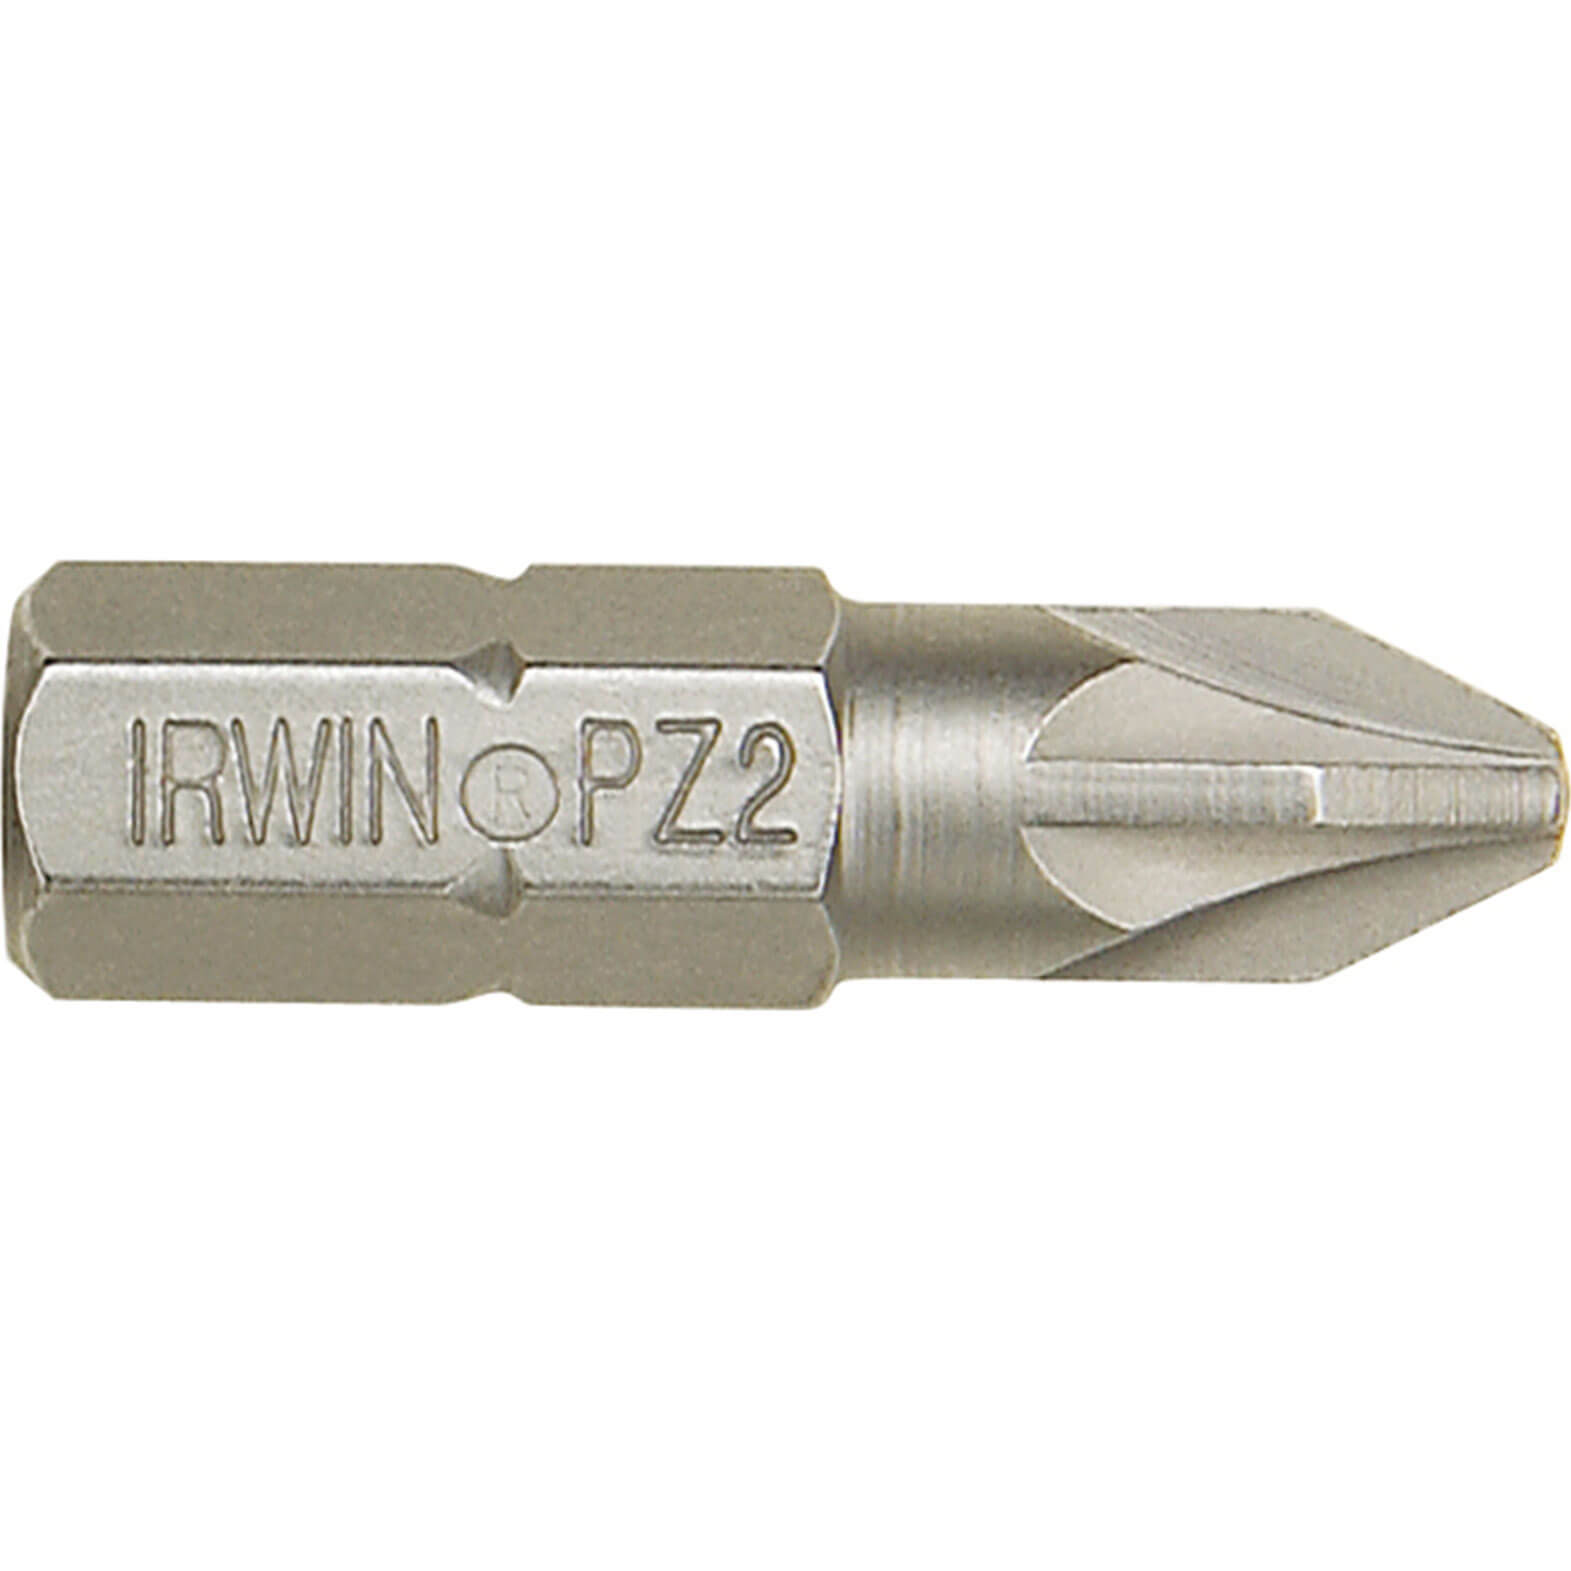 Photo of Irwin Pozi Screwdriver Bit Pz2 50mm Pack Of 5